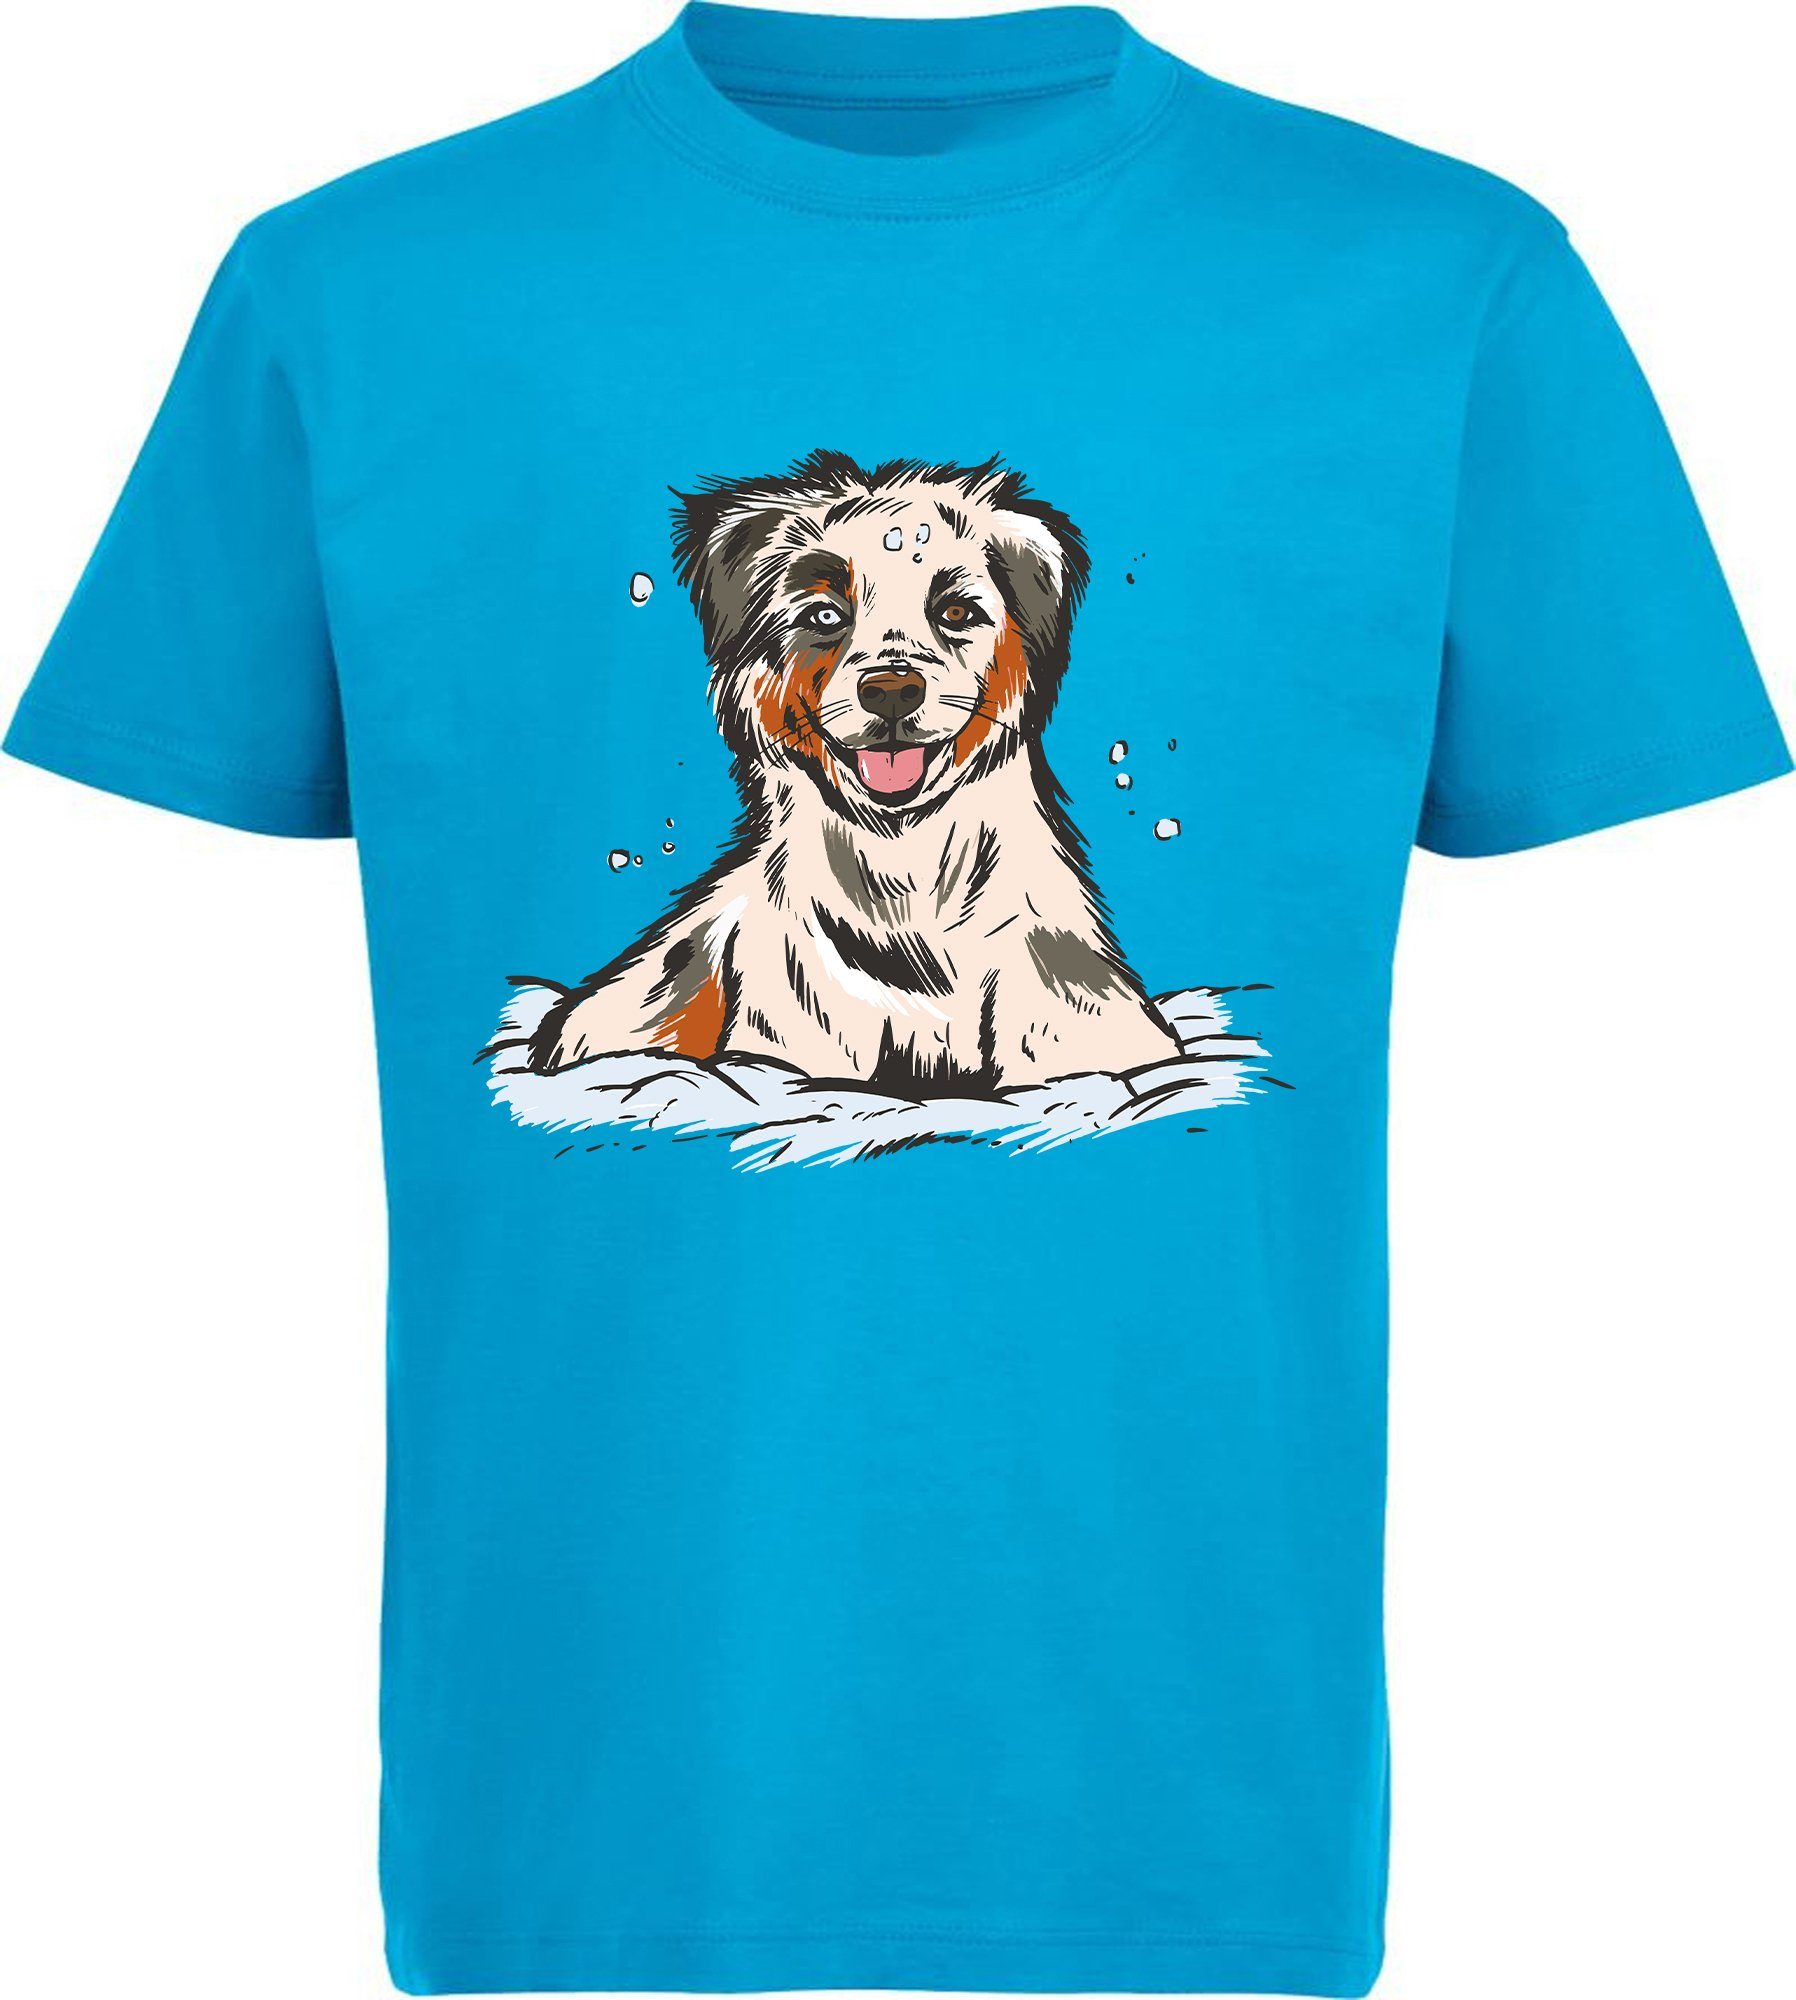 MyDesign24 Print-Shirt bedrucktes Kinder und Jugend Hunde T-Shirt Australian Shepherd Welpe Baumwollshirt mit Aufdruck, i216 aqua blau